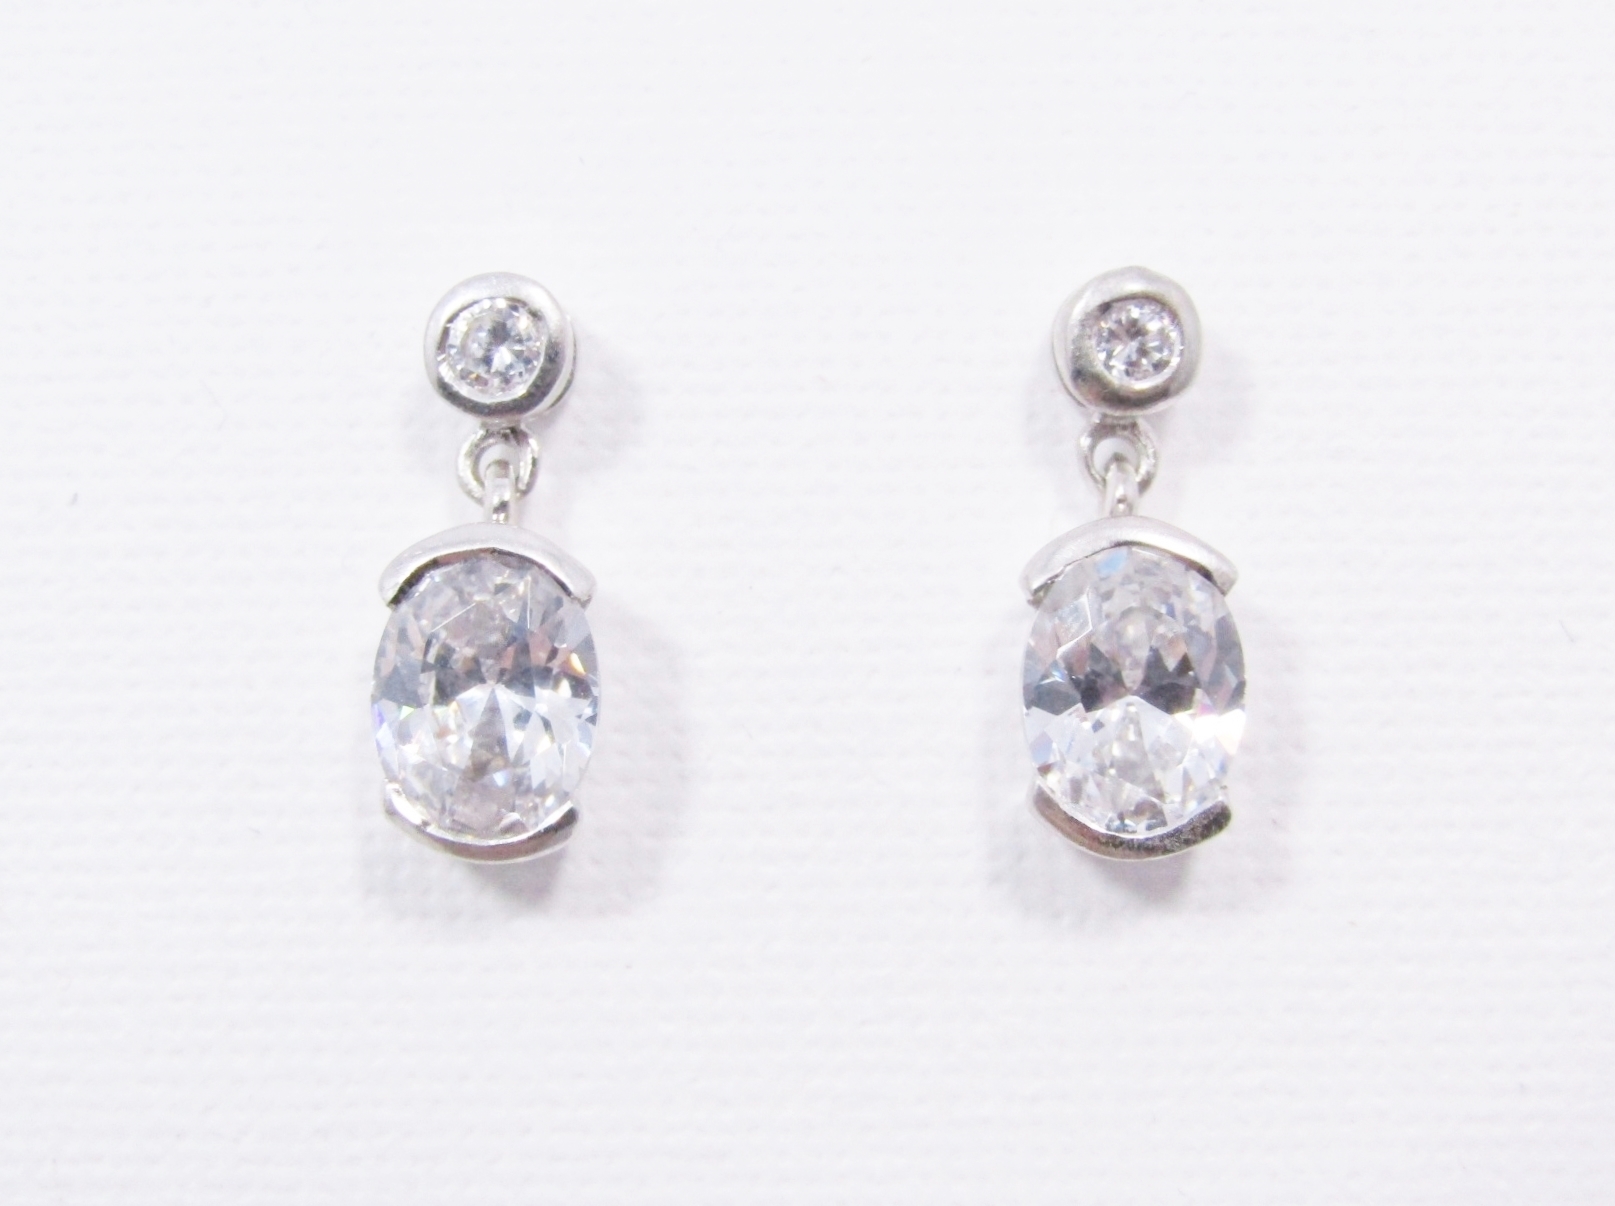 A lovely Pair of Dangling Zirconia Drop Earrings in Sterling Silver.